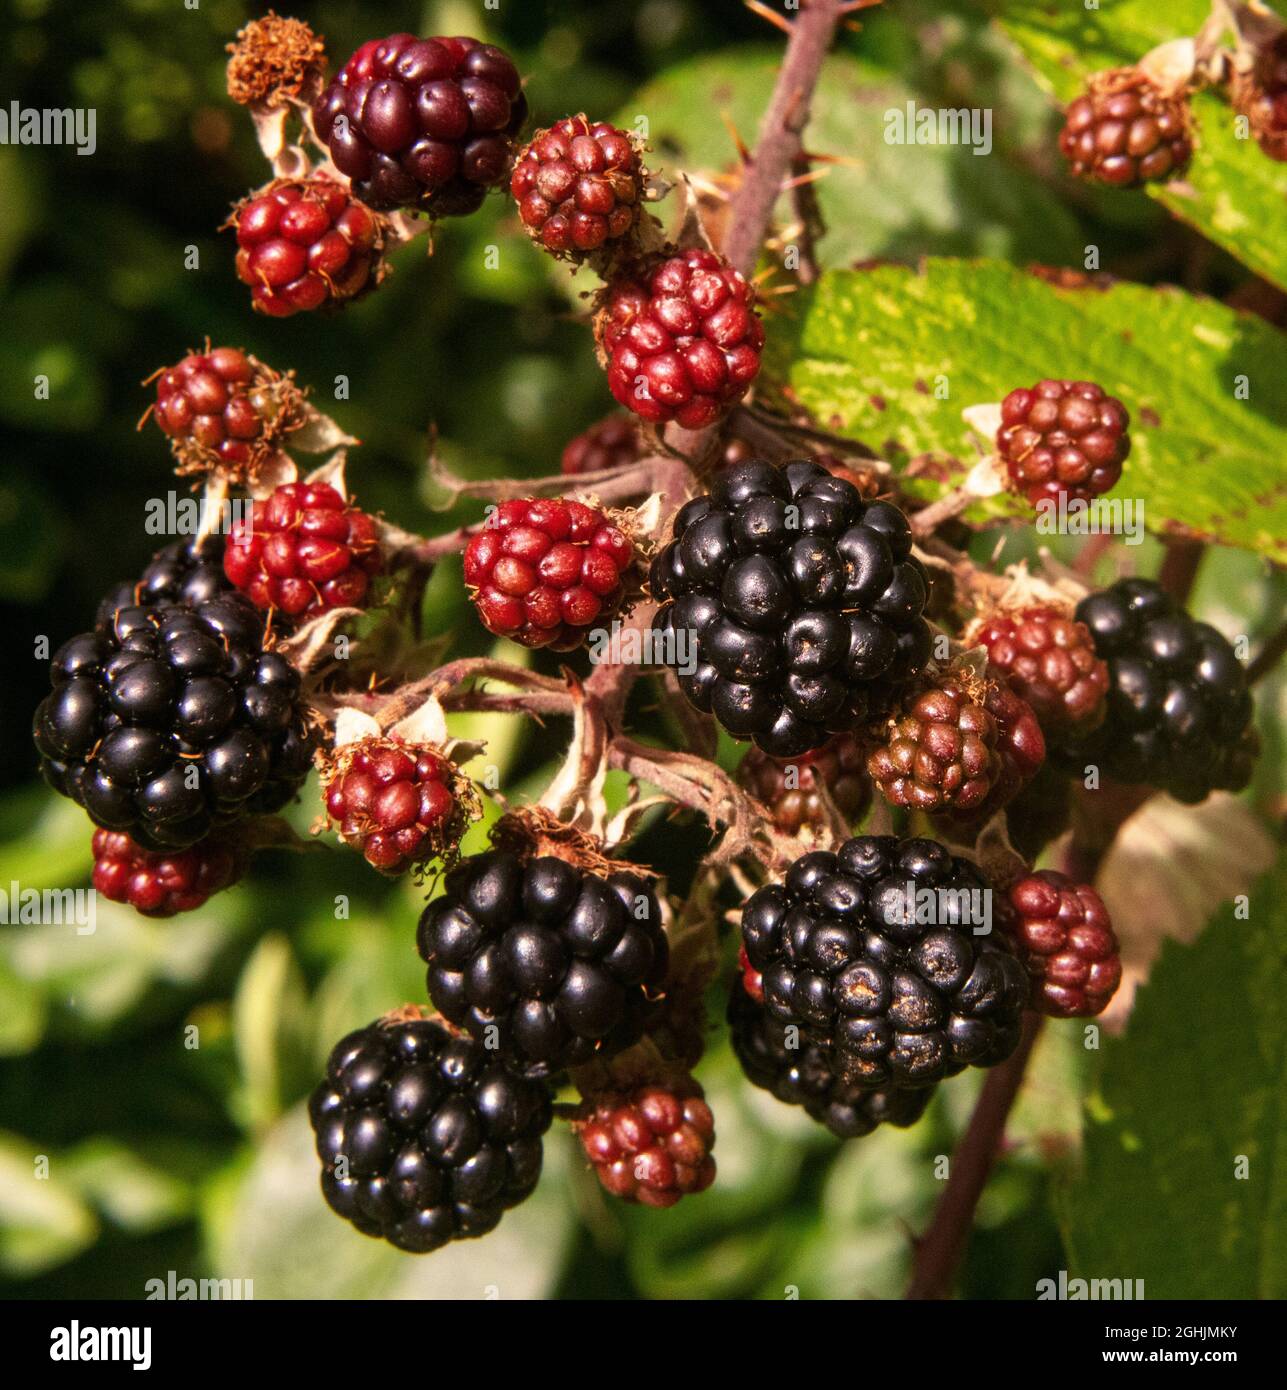 Foraging Red Blackberries (Rubus pubescens)